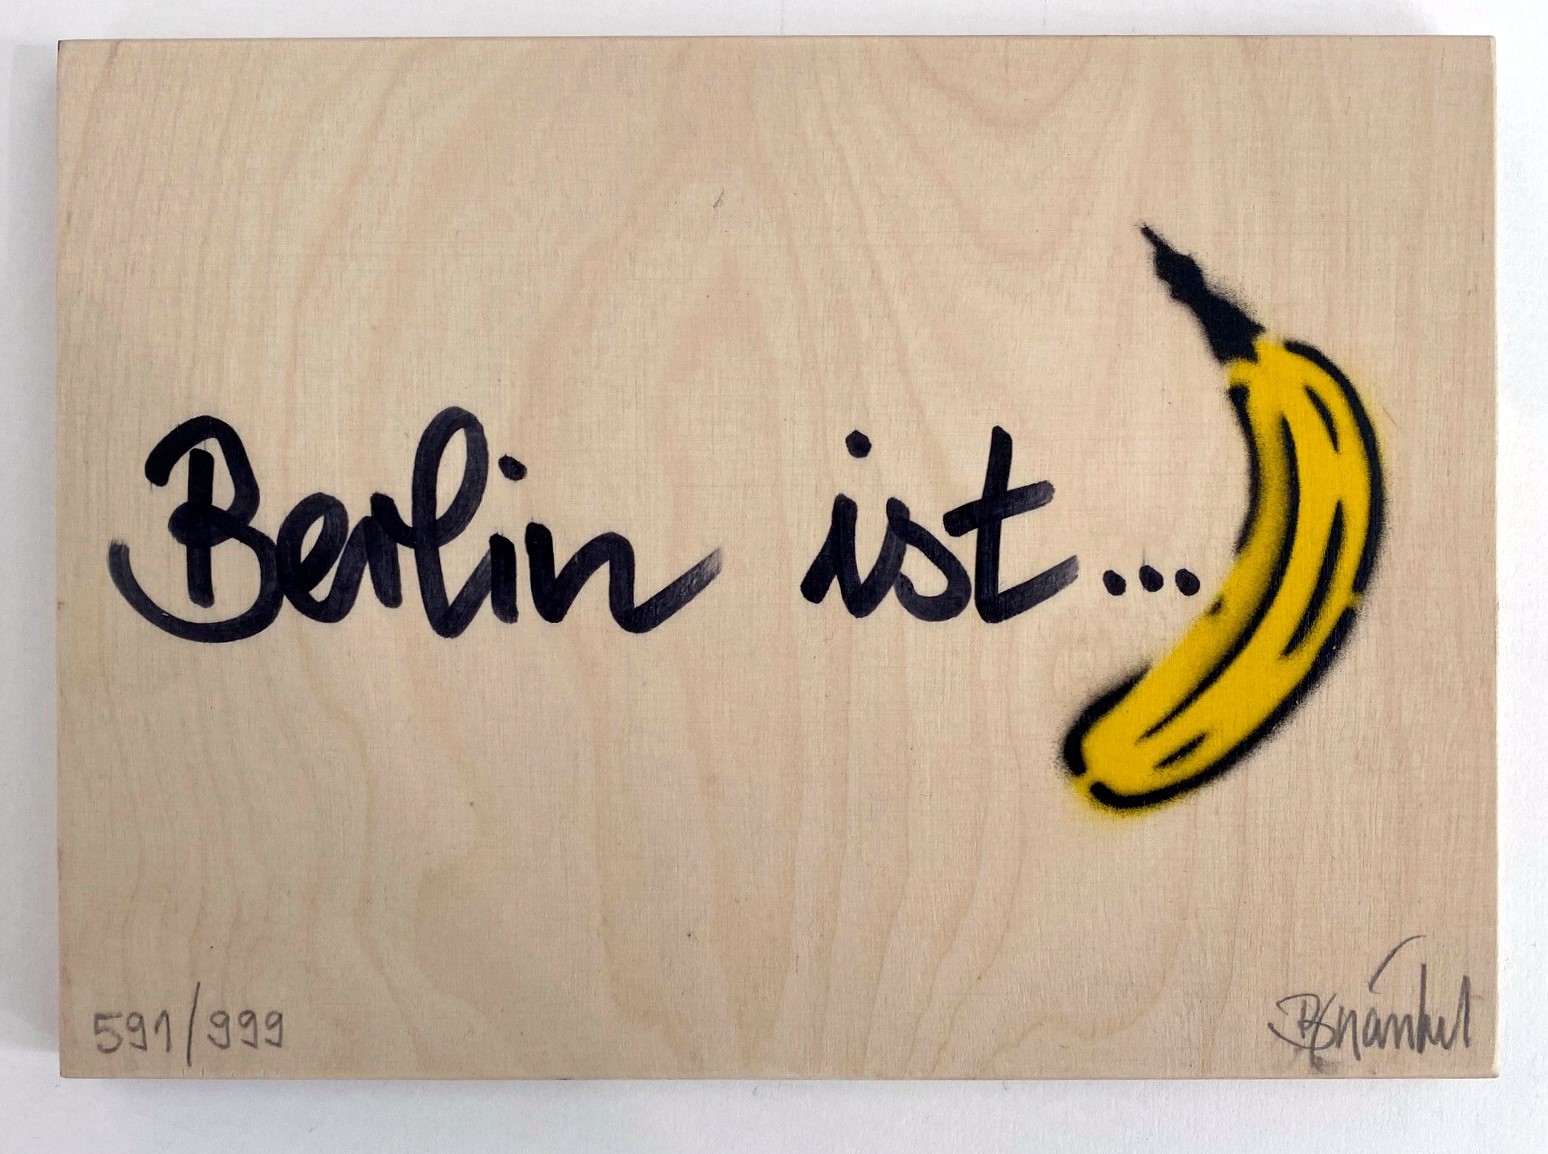 Berlin ist Banane